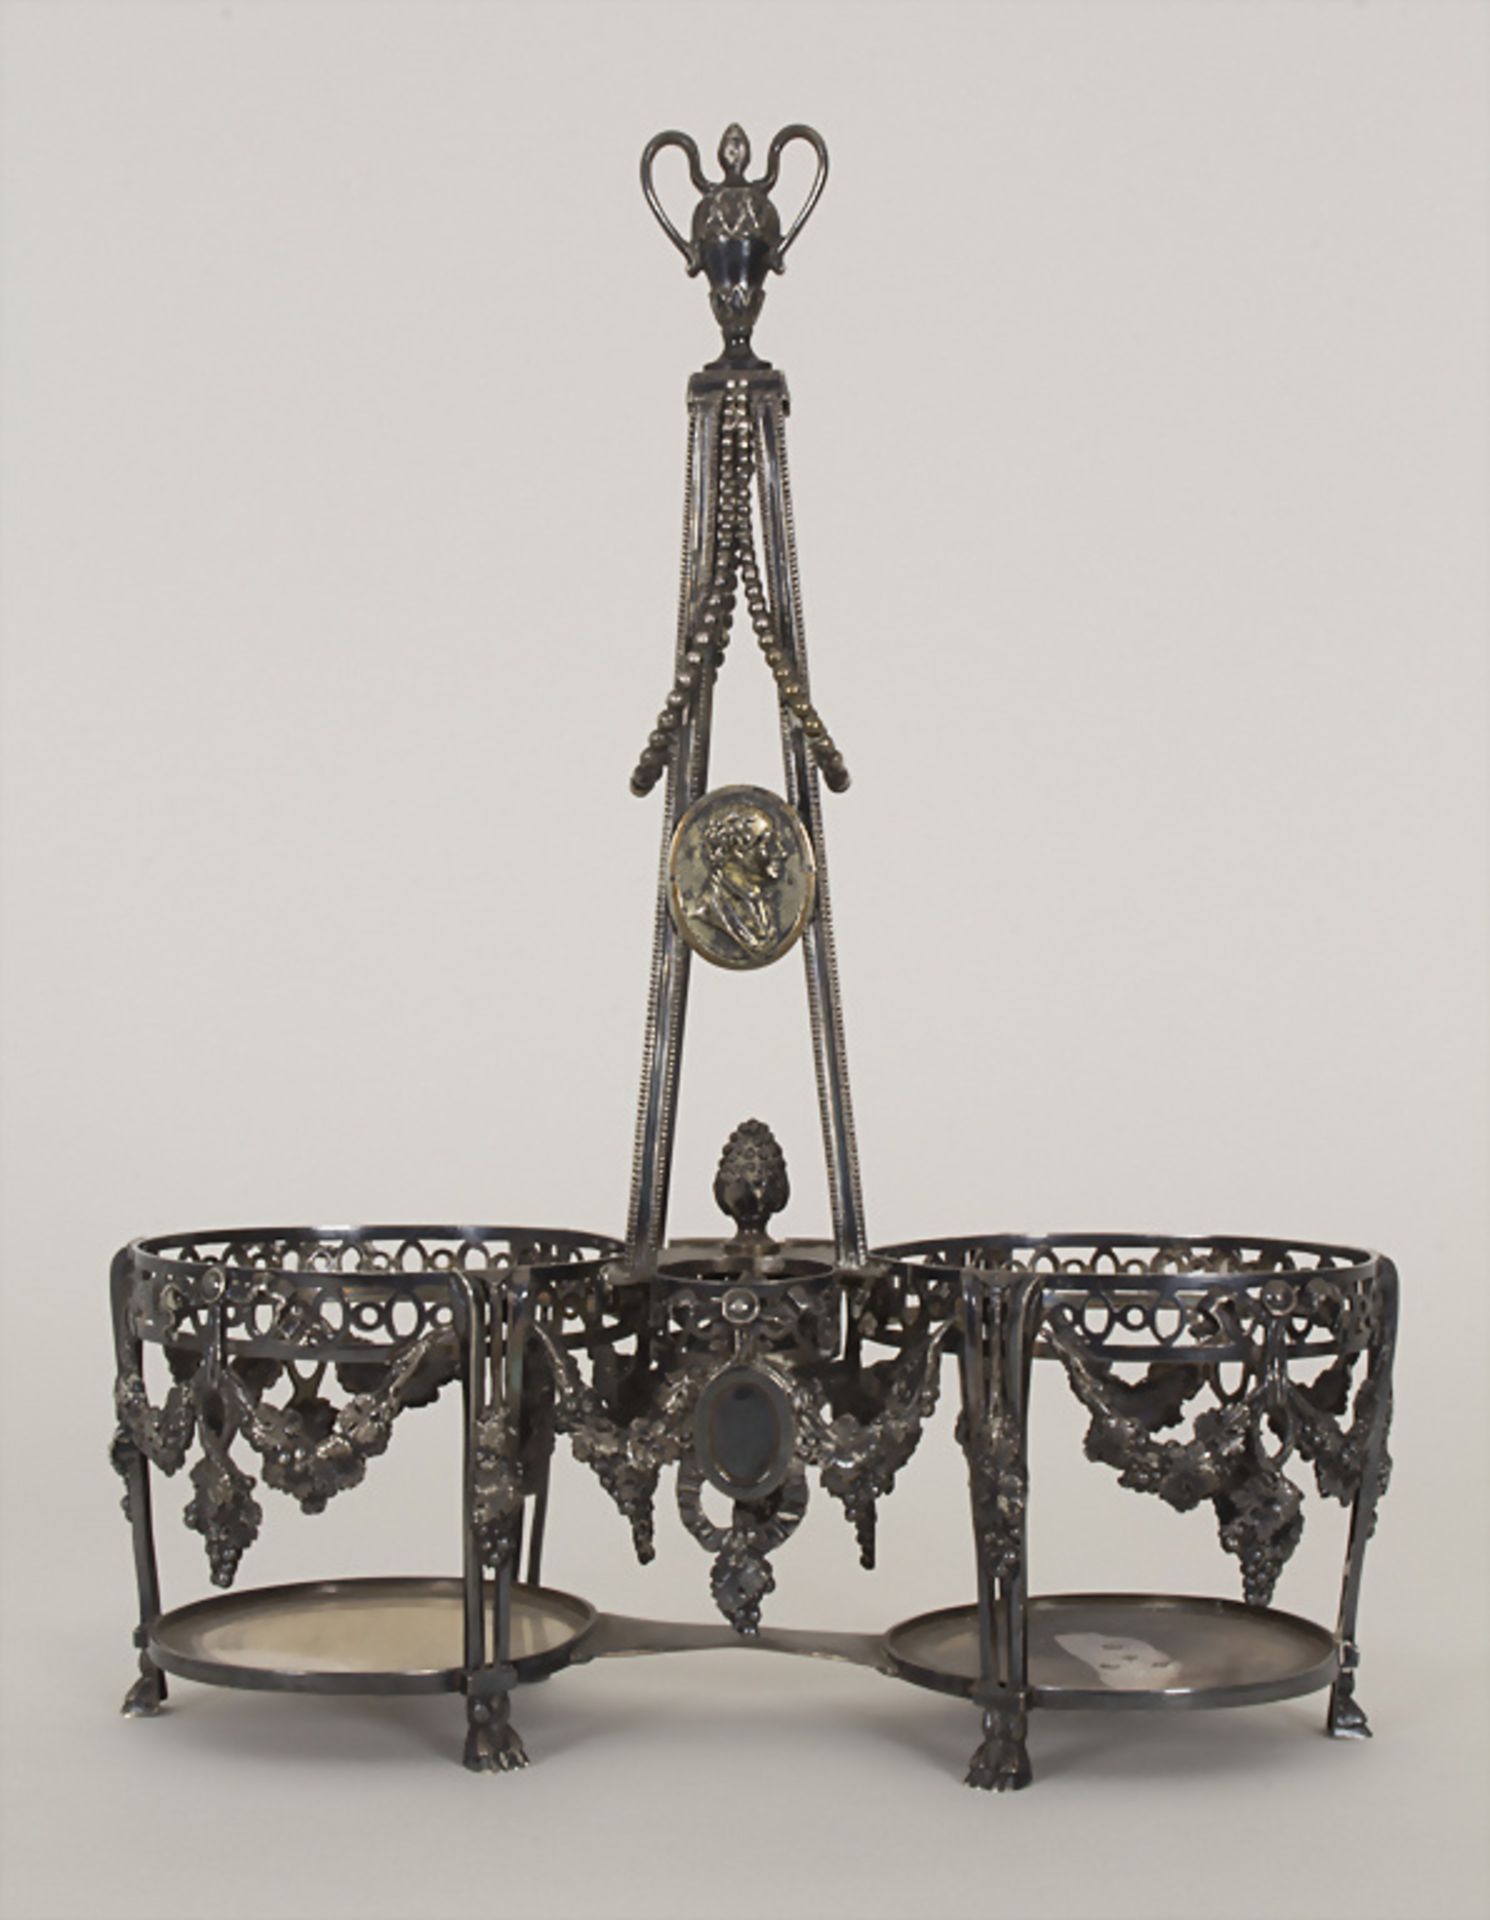 Louis-Seize Menage / A Louis-seize silver cruet stand, Namur, 1789